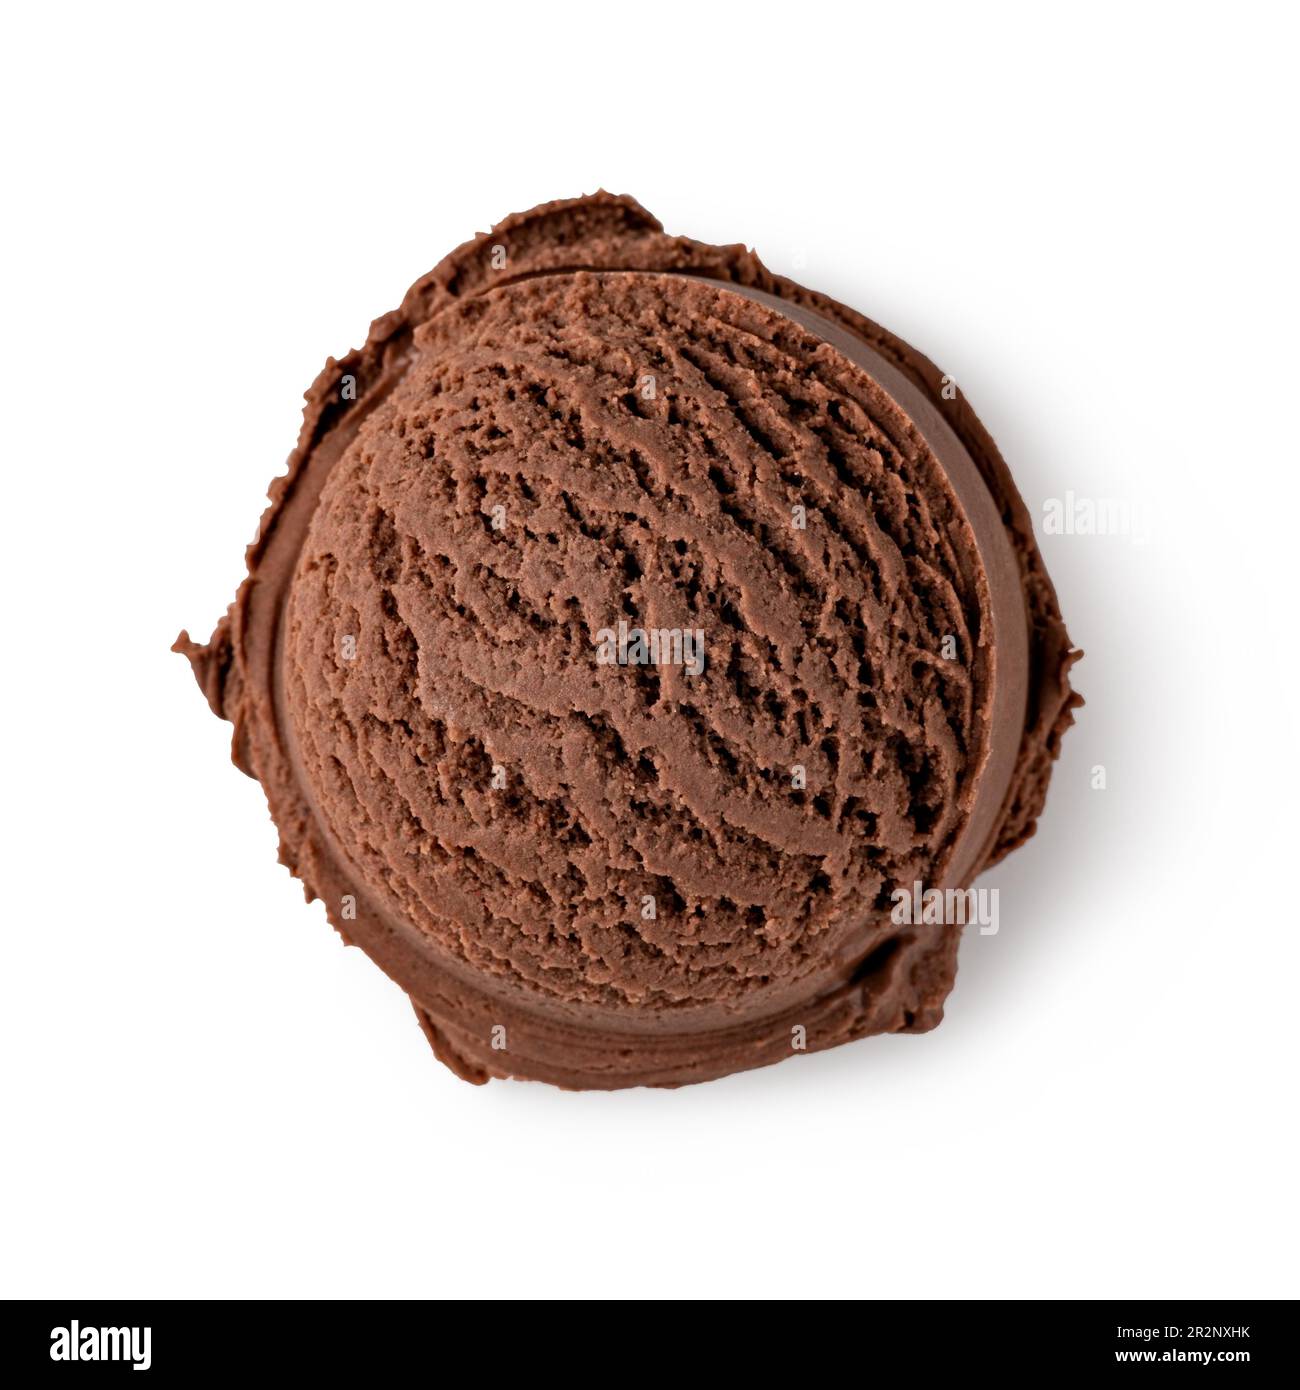 https://c8.alamy.com/comp/2R2NXHK/chocolate-ice-cream-balls-isolated-on-white-background-2R2NXHK.jpg